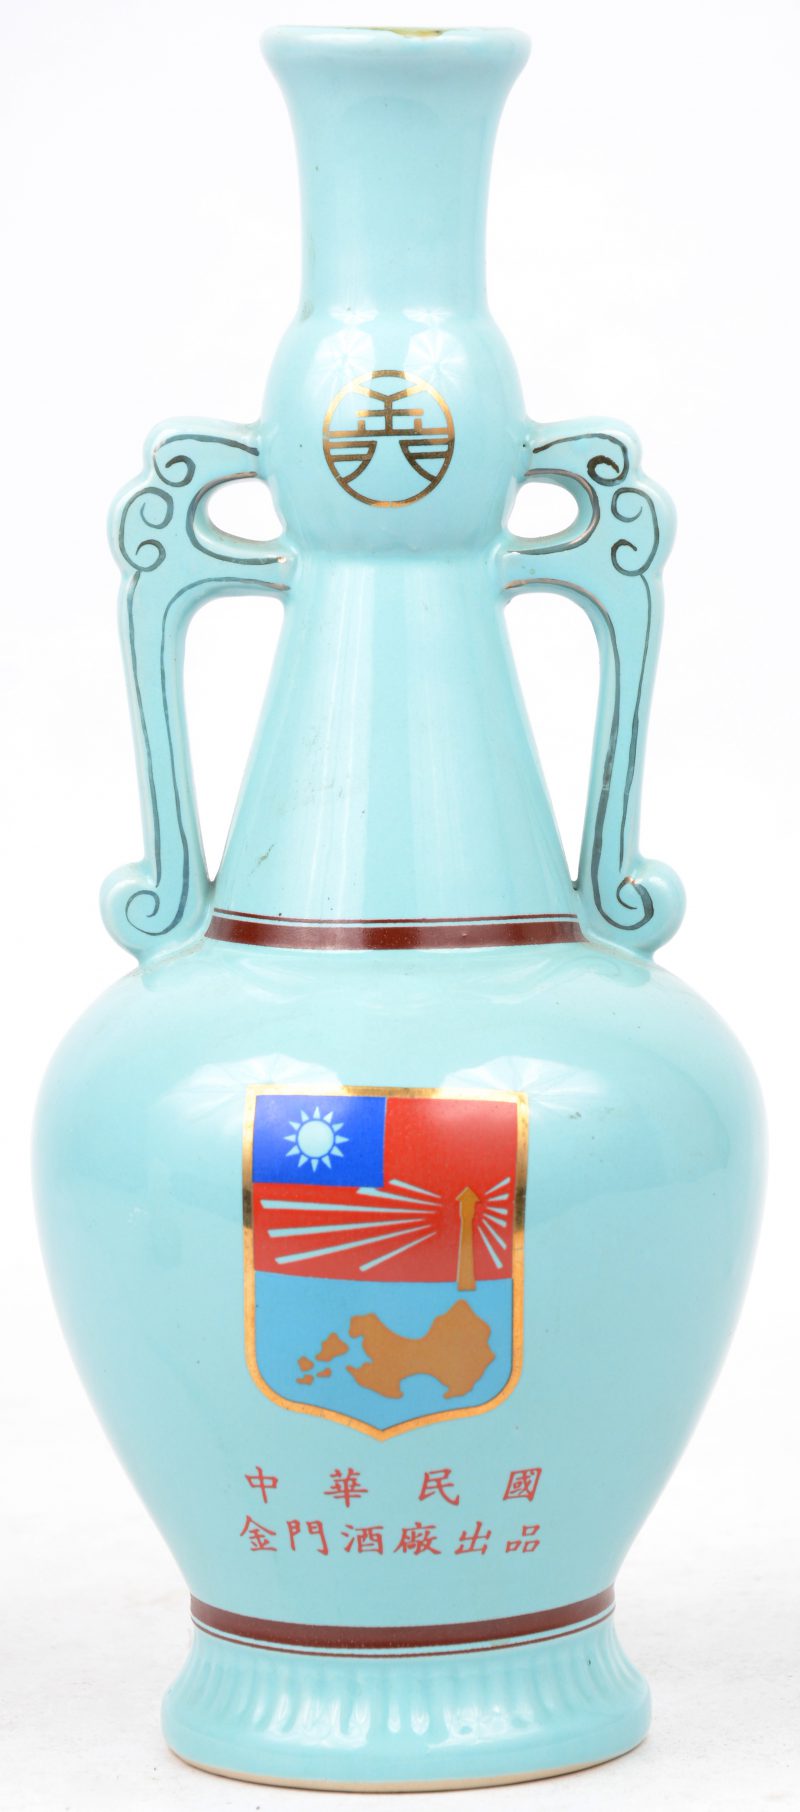 Poederblauwe vaas van Chinees porselein. “A Product of the Kin Men Distillery - Republic of China.